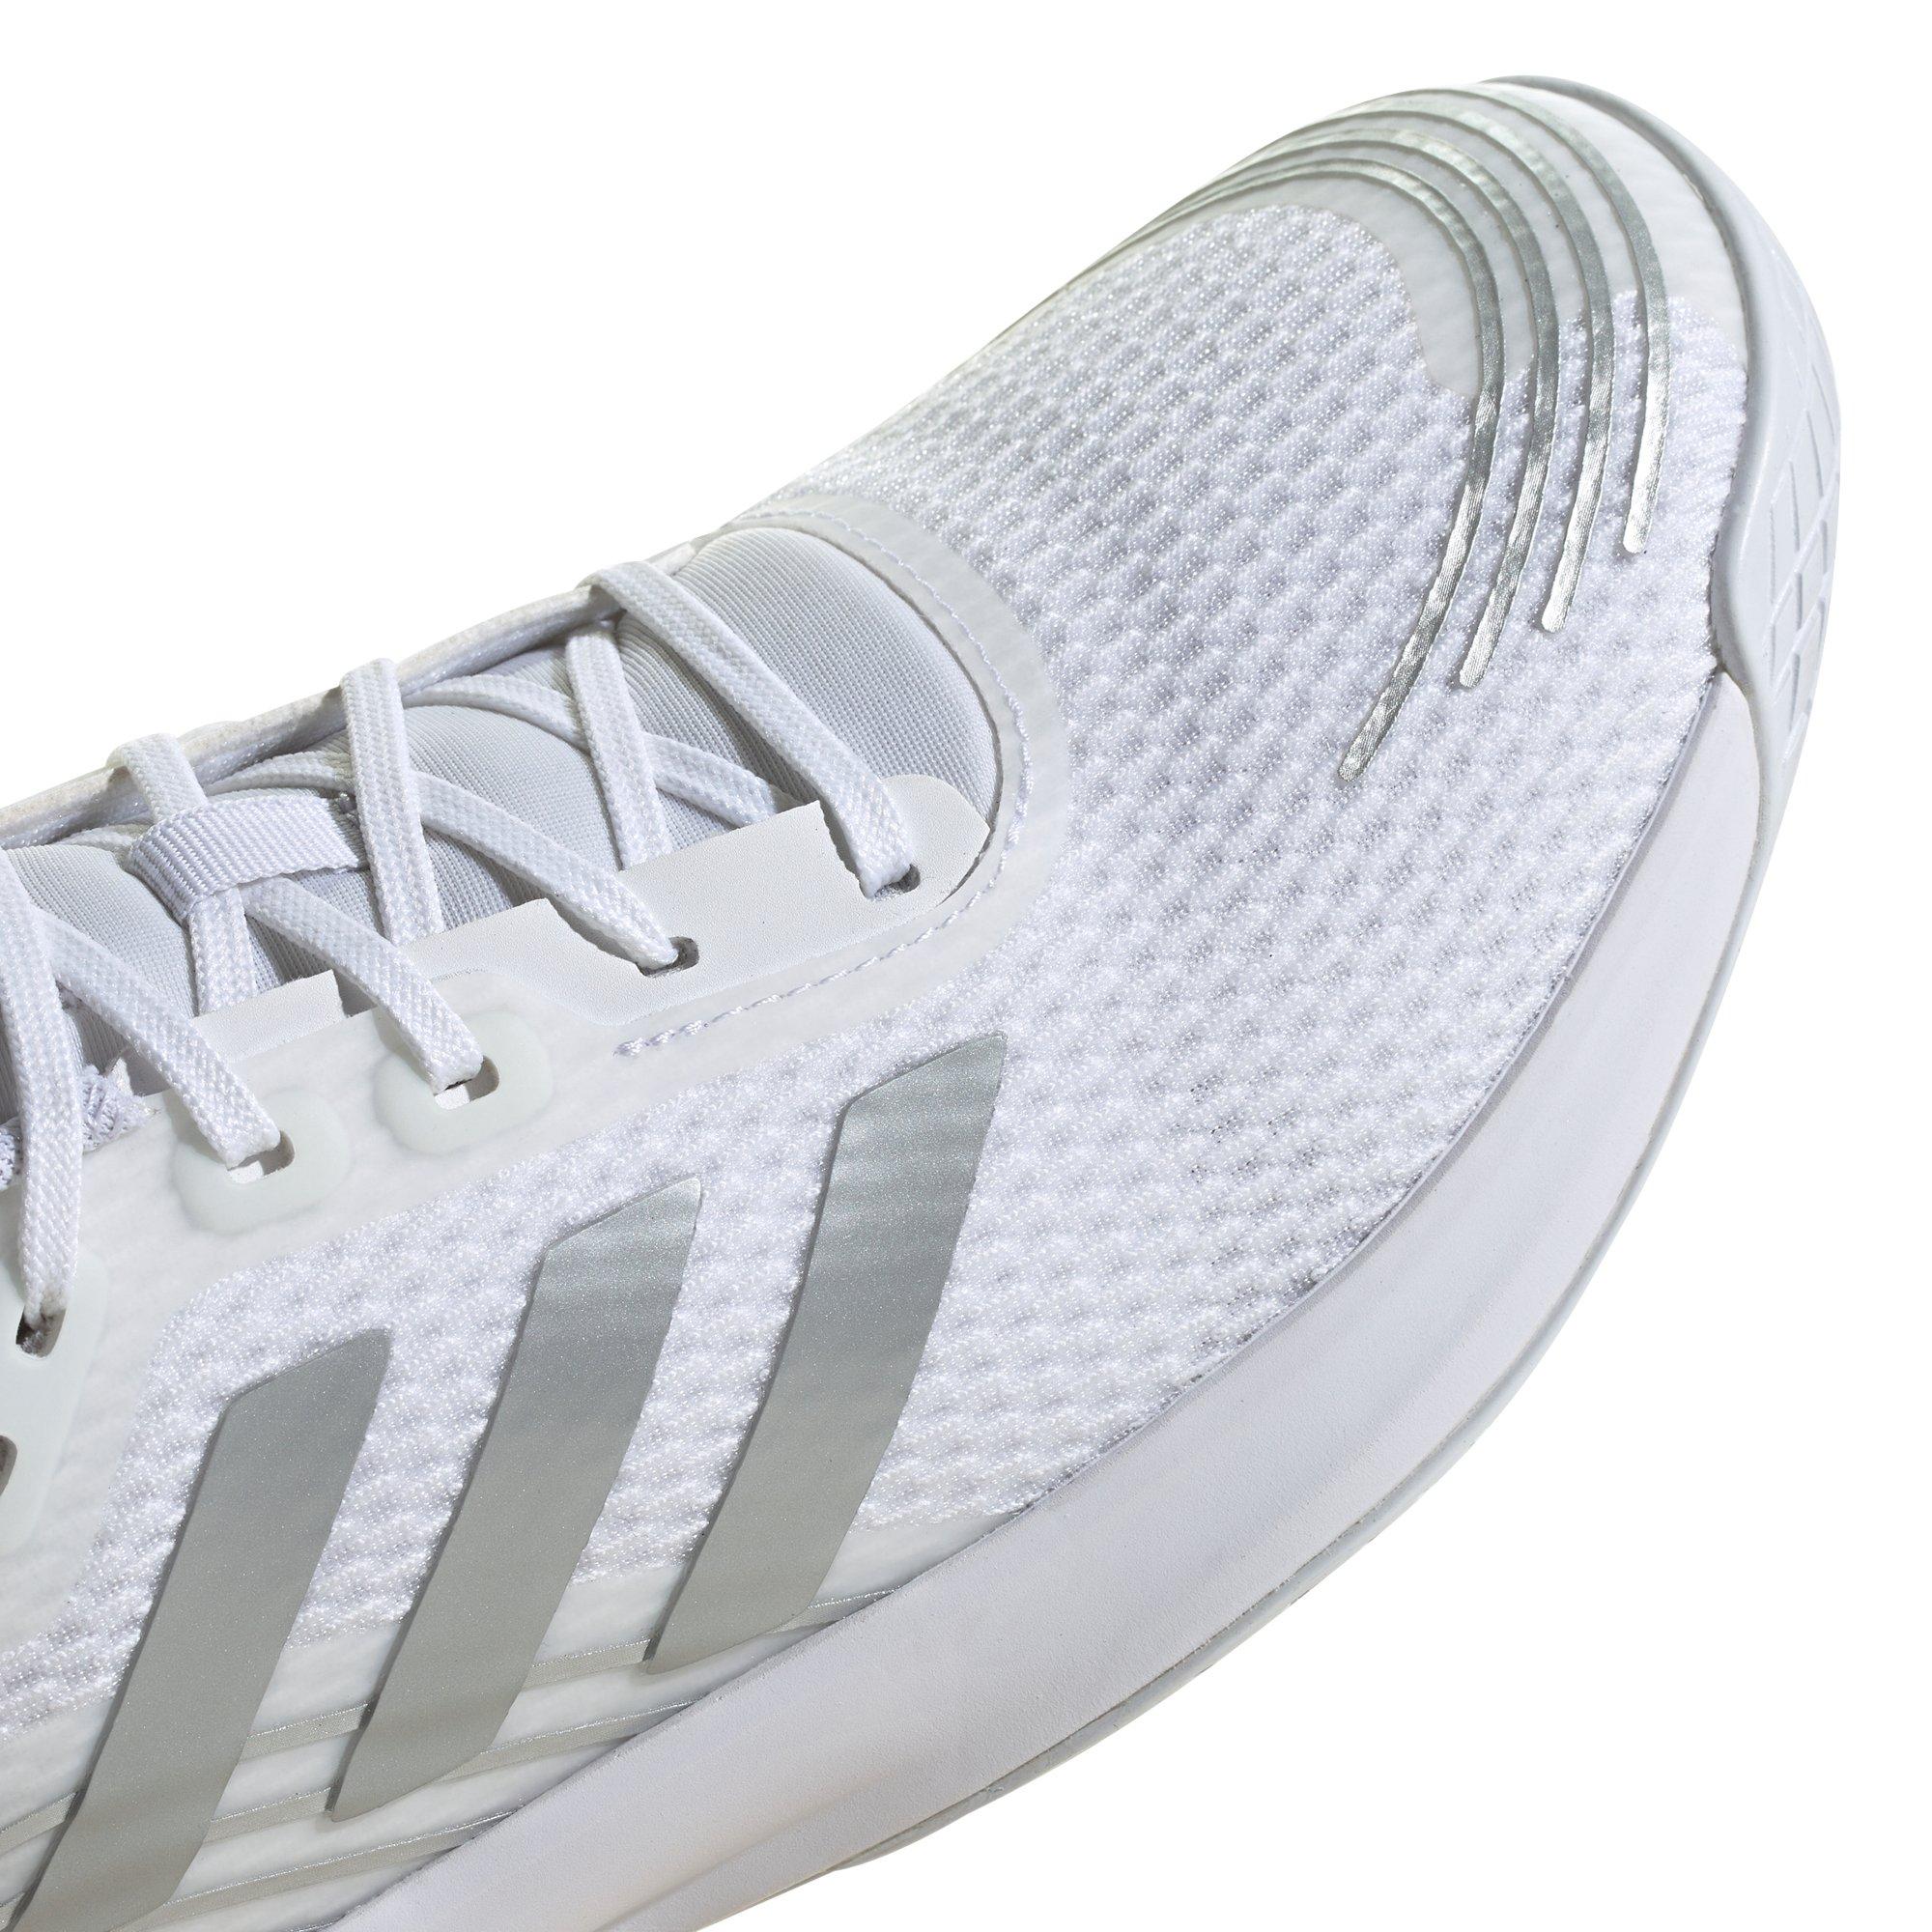 adidas Novaflight Primegreen "White/Metallic Silver" Volleyball Shoe